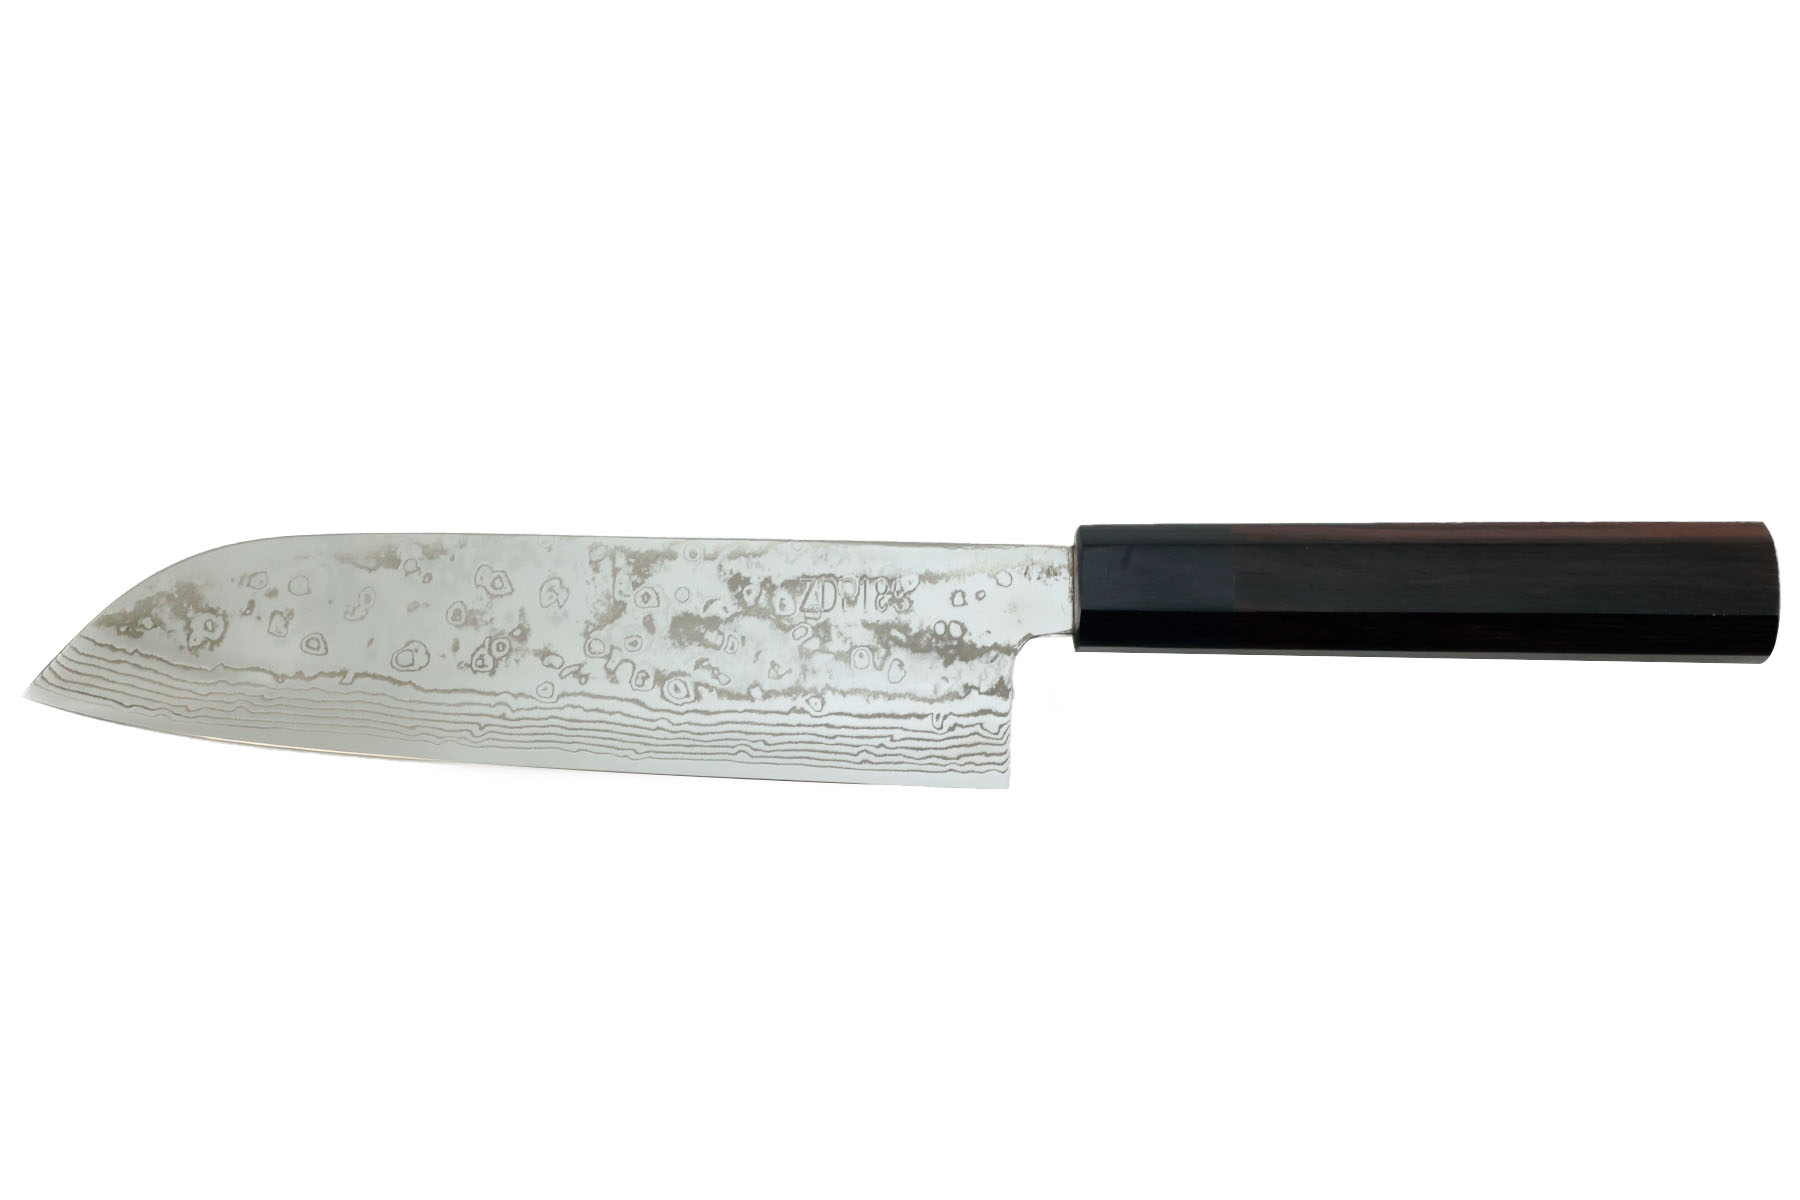 Couteau japonais artisanal de Yoshida Hamono - Couteau Santoku 18 cm - ZDP189 - Damas